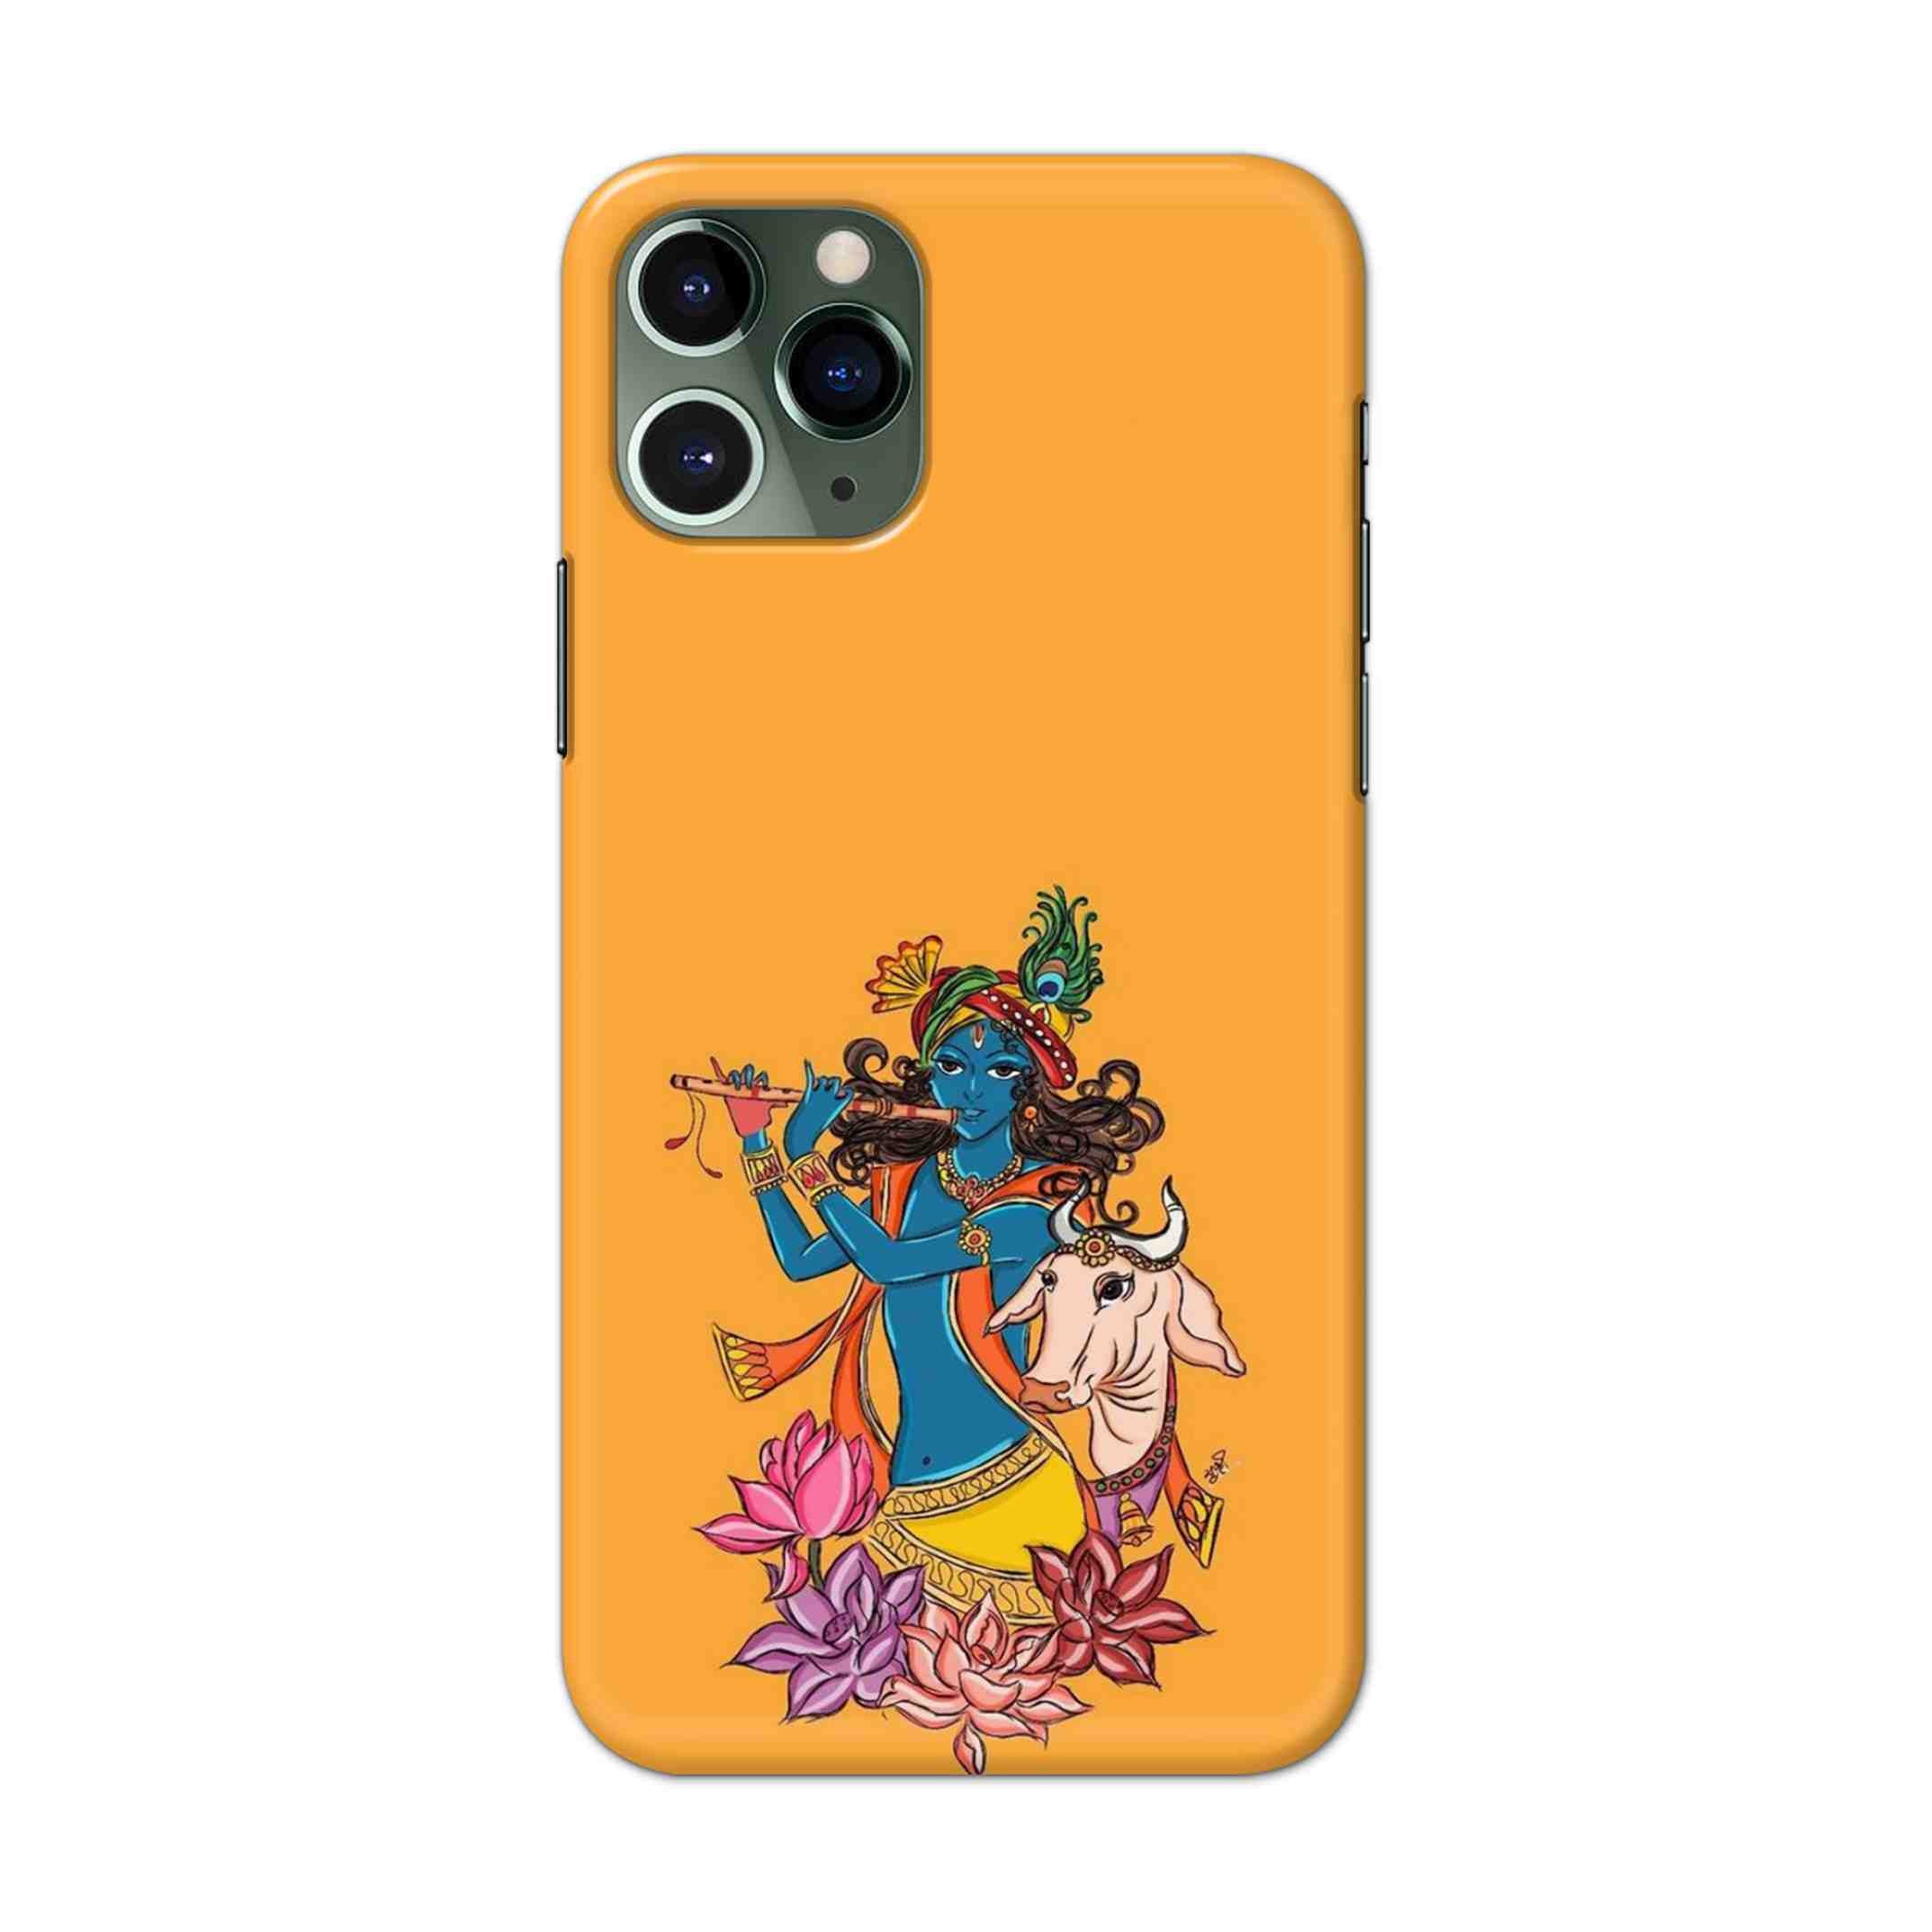 Buy Radhe Krishna Hard Back Mobile Phone Case/Cover For iPhone 11 Pro Online